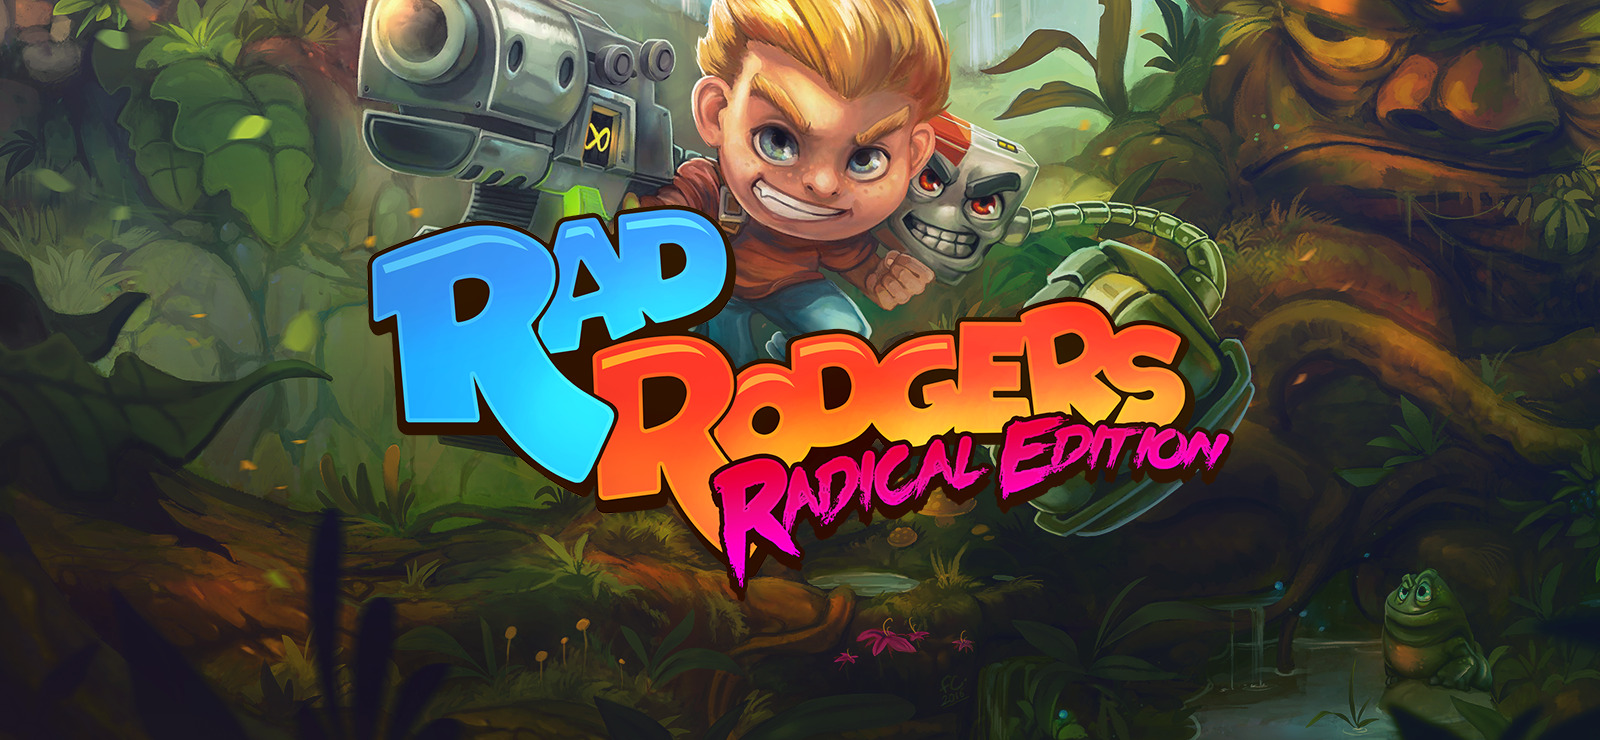 Rad Radical Edition on GOG.com